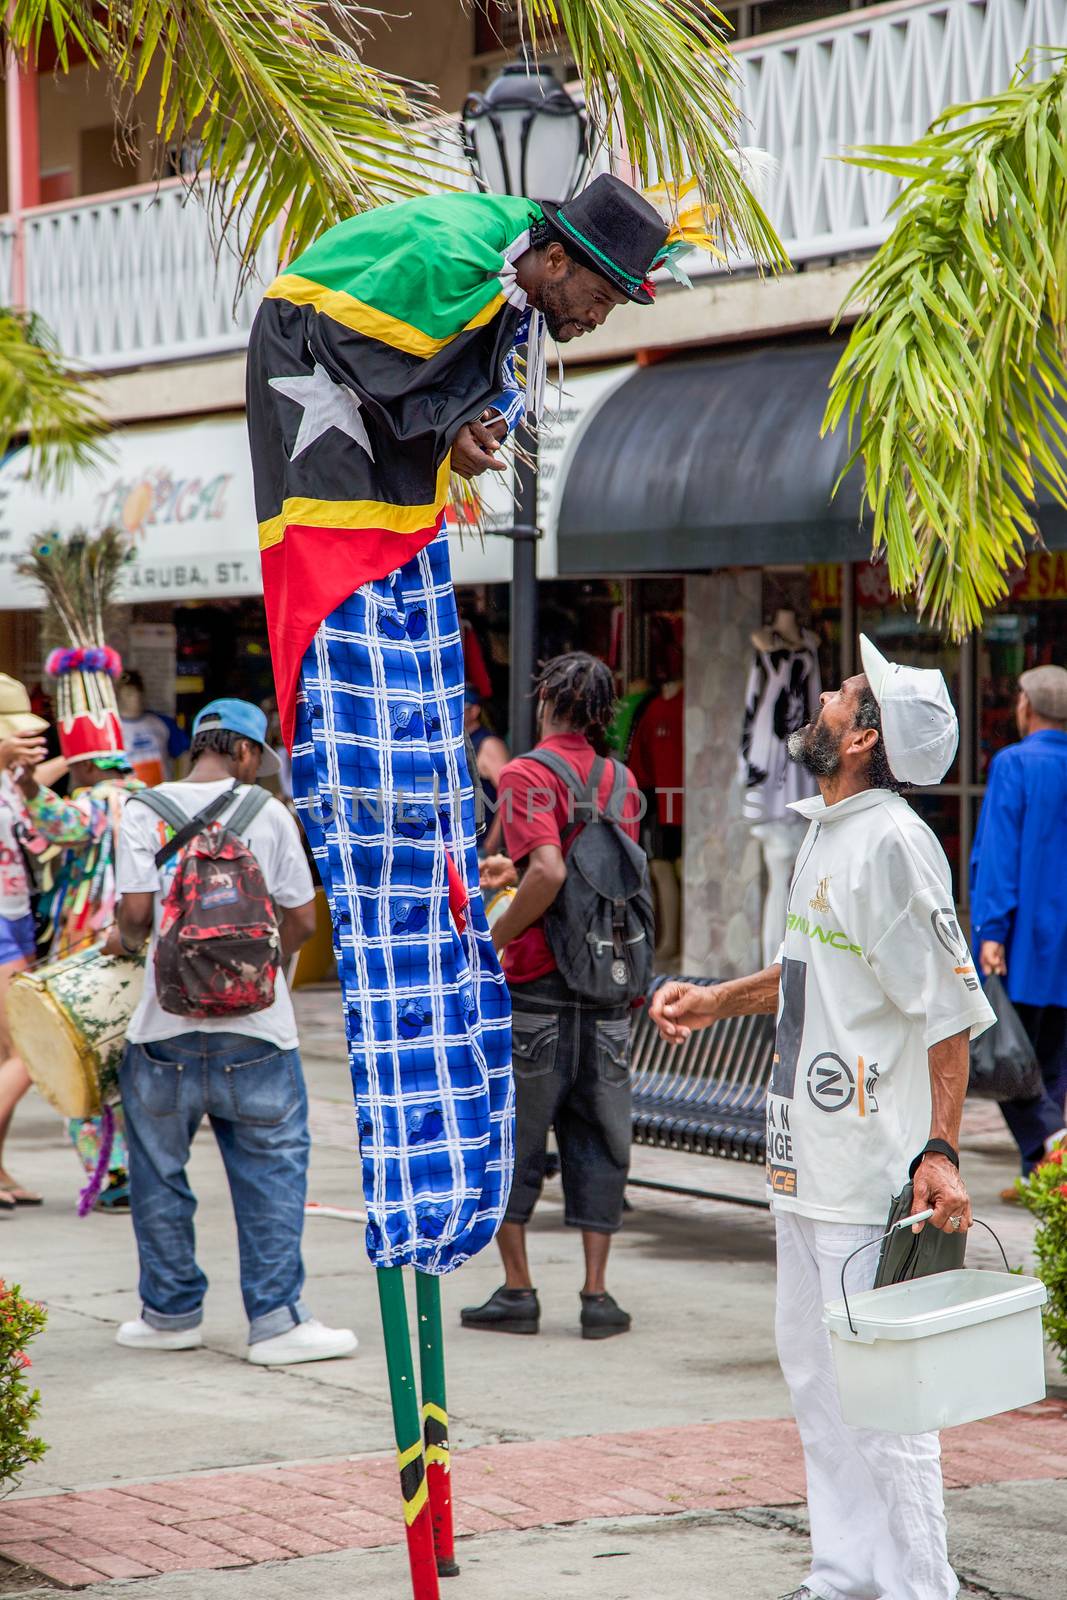 St. Kitts on Stilts by teacherdad48@yahoo.com